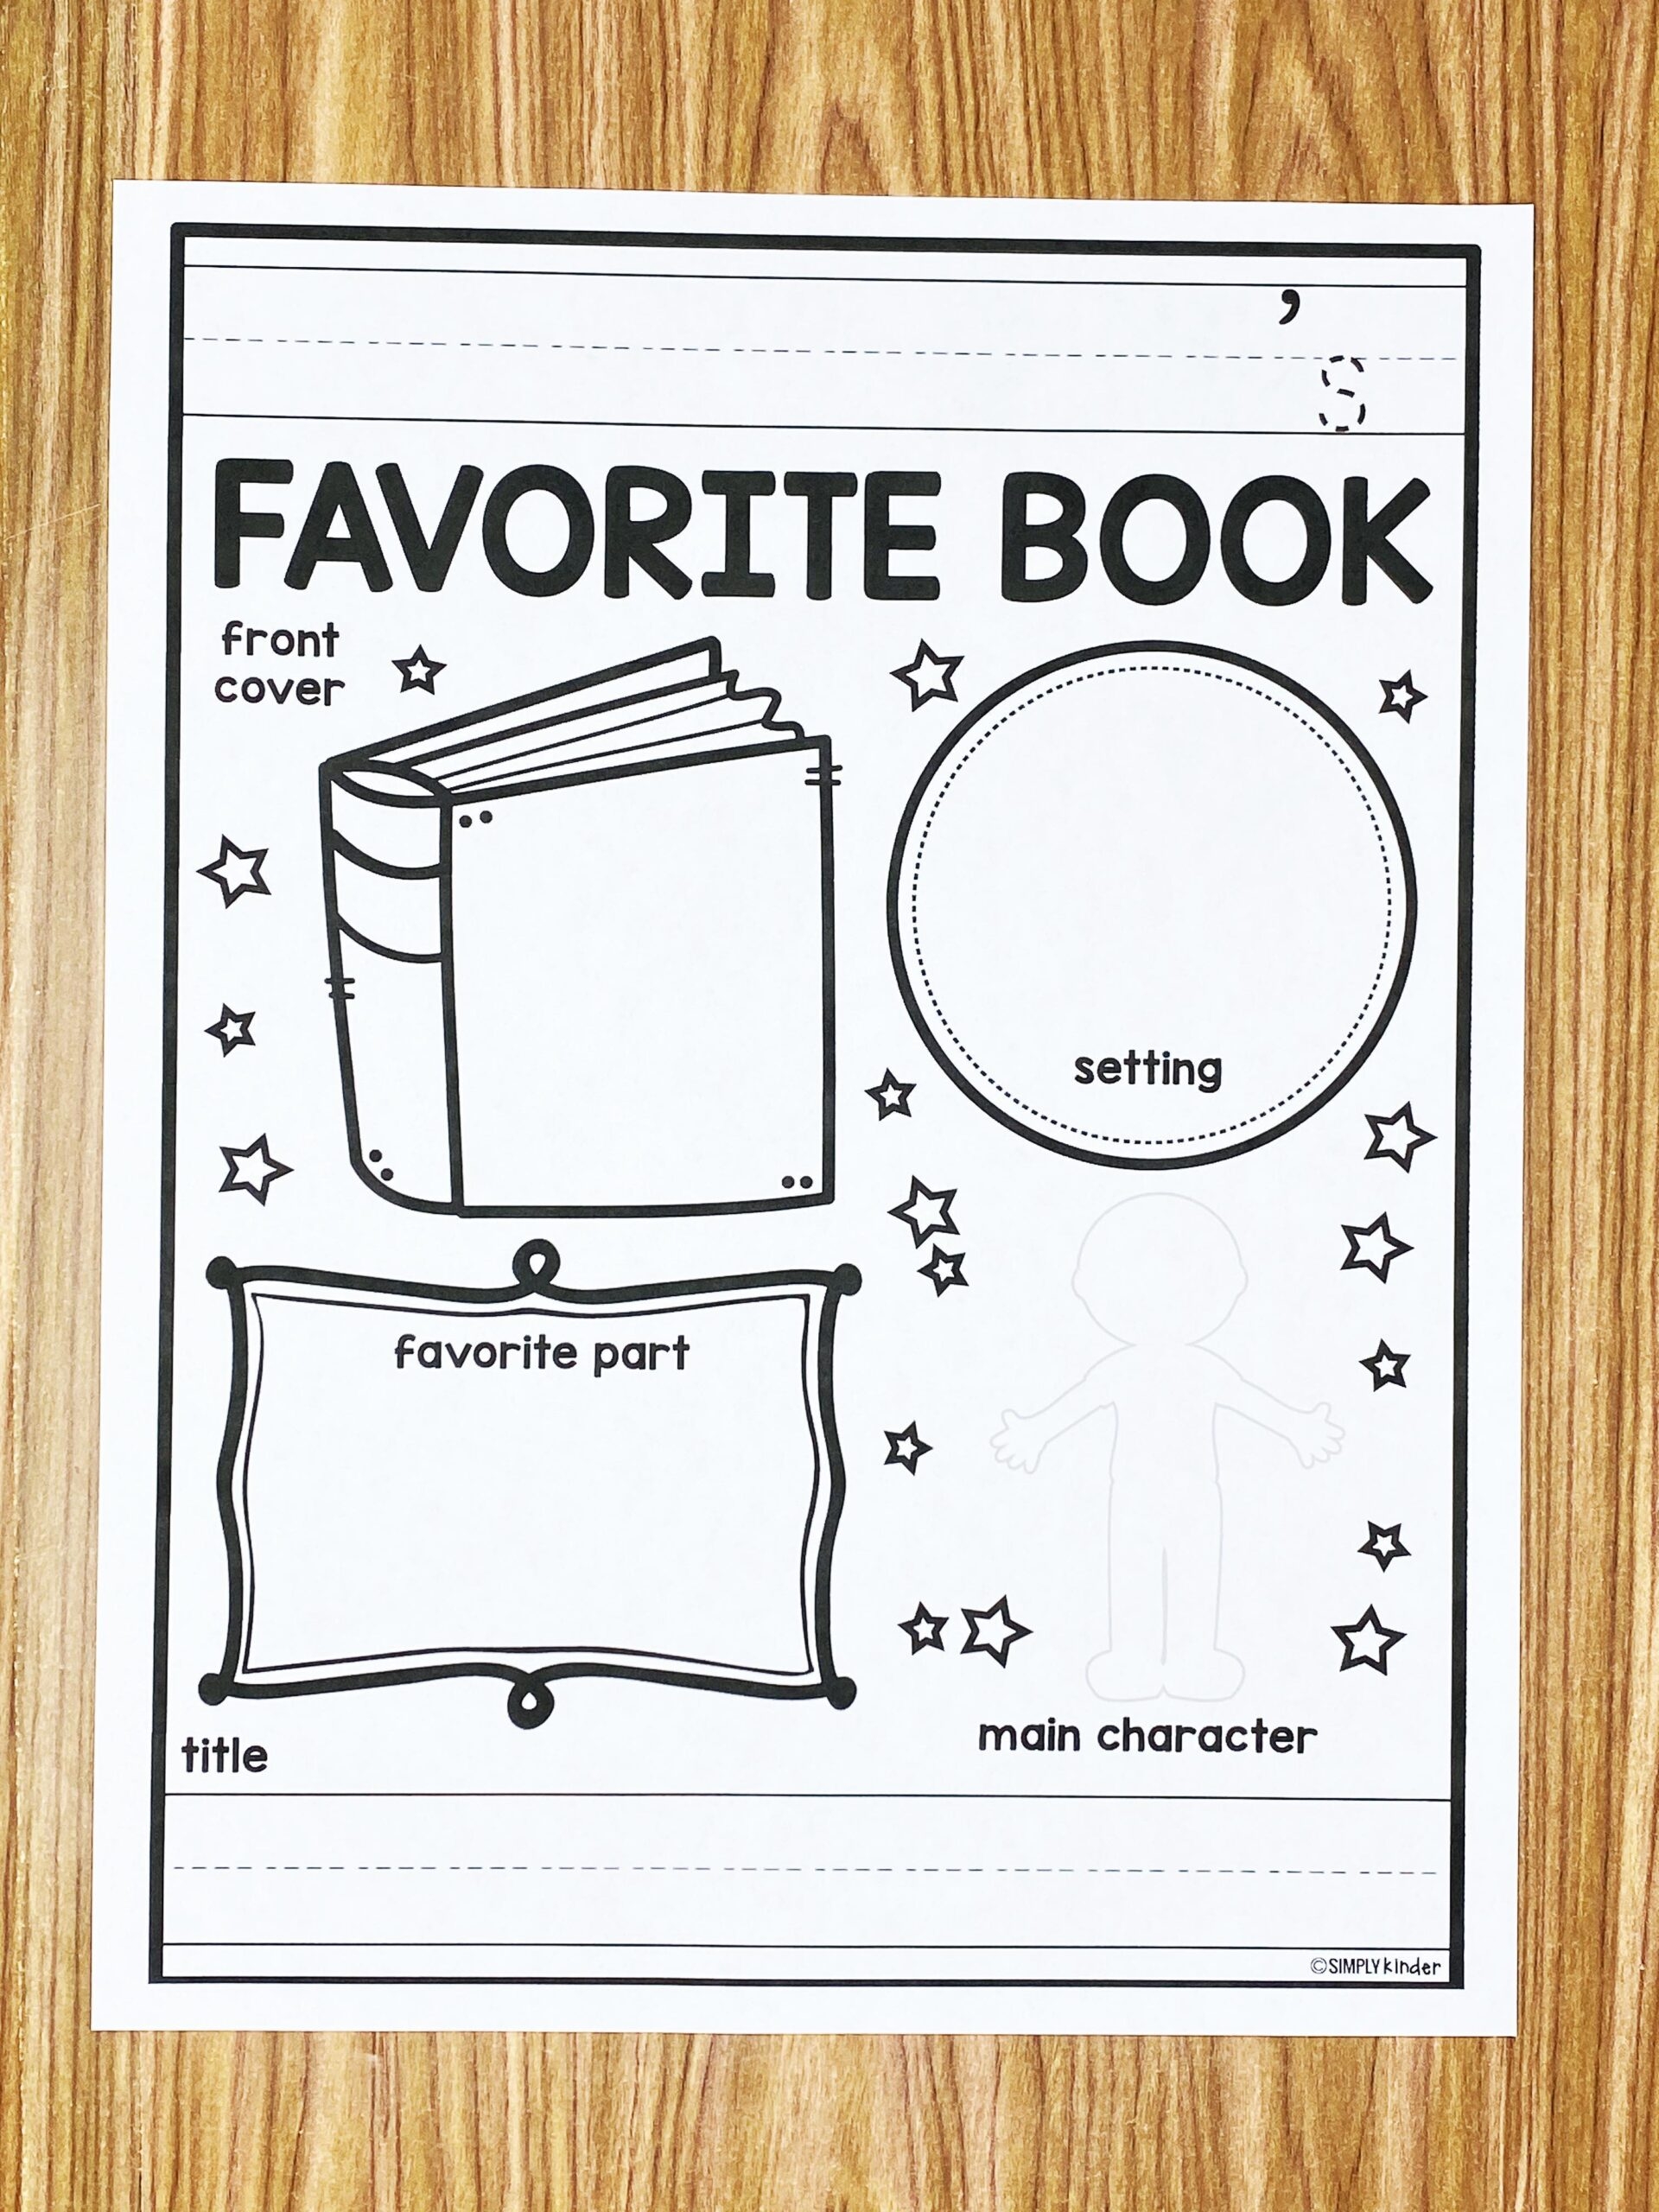 Favorite Book Free Printable Simply Kinder - Free Printable Books For Kindergarten